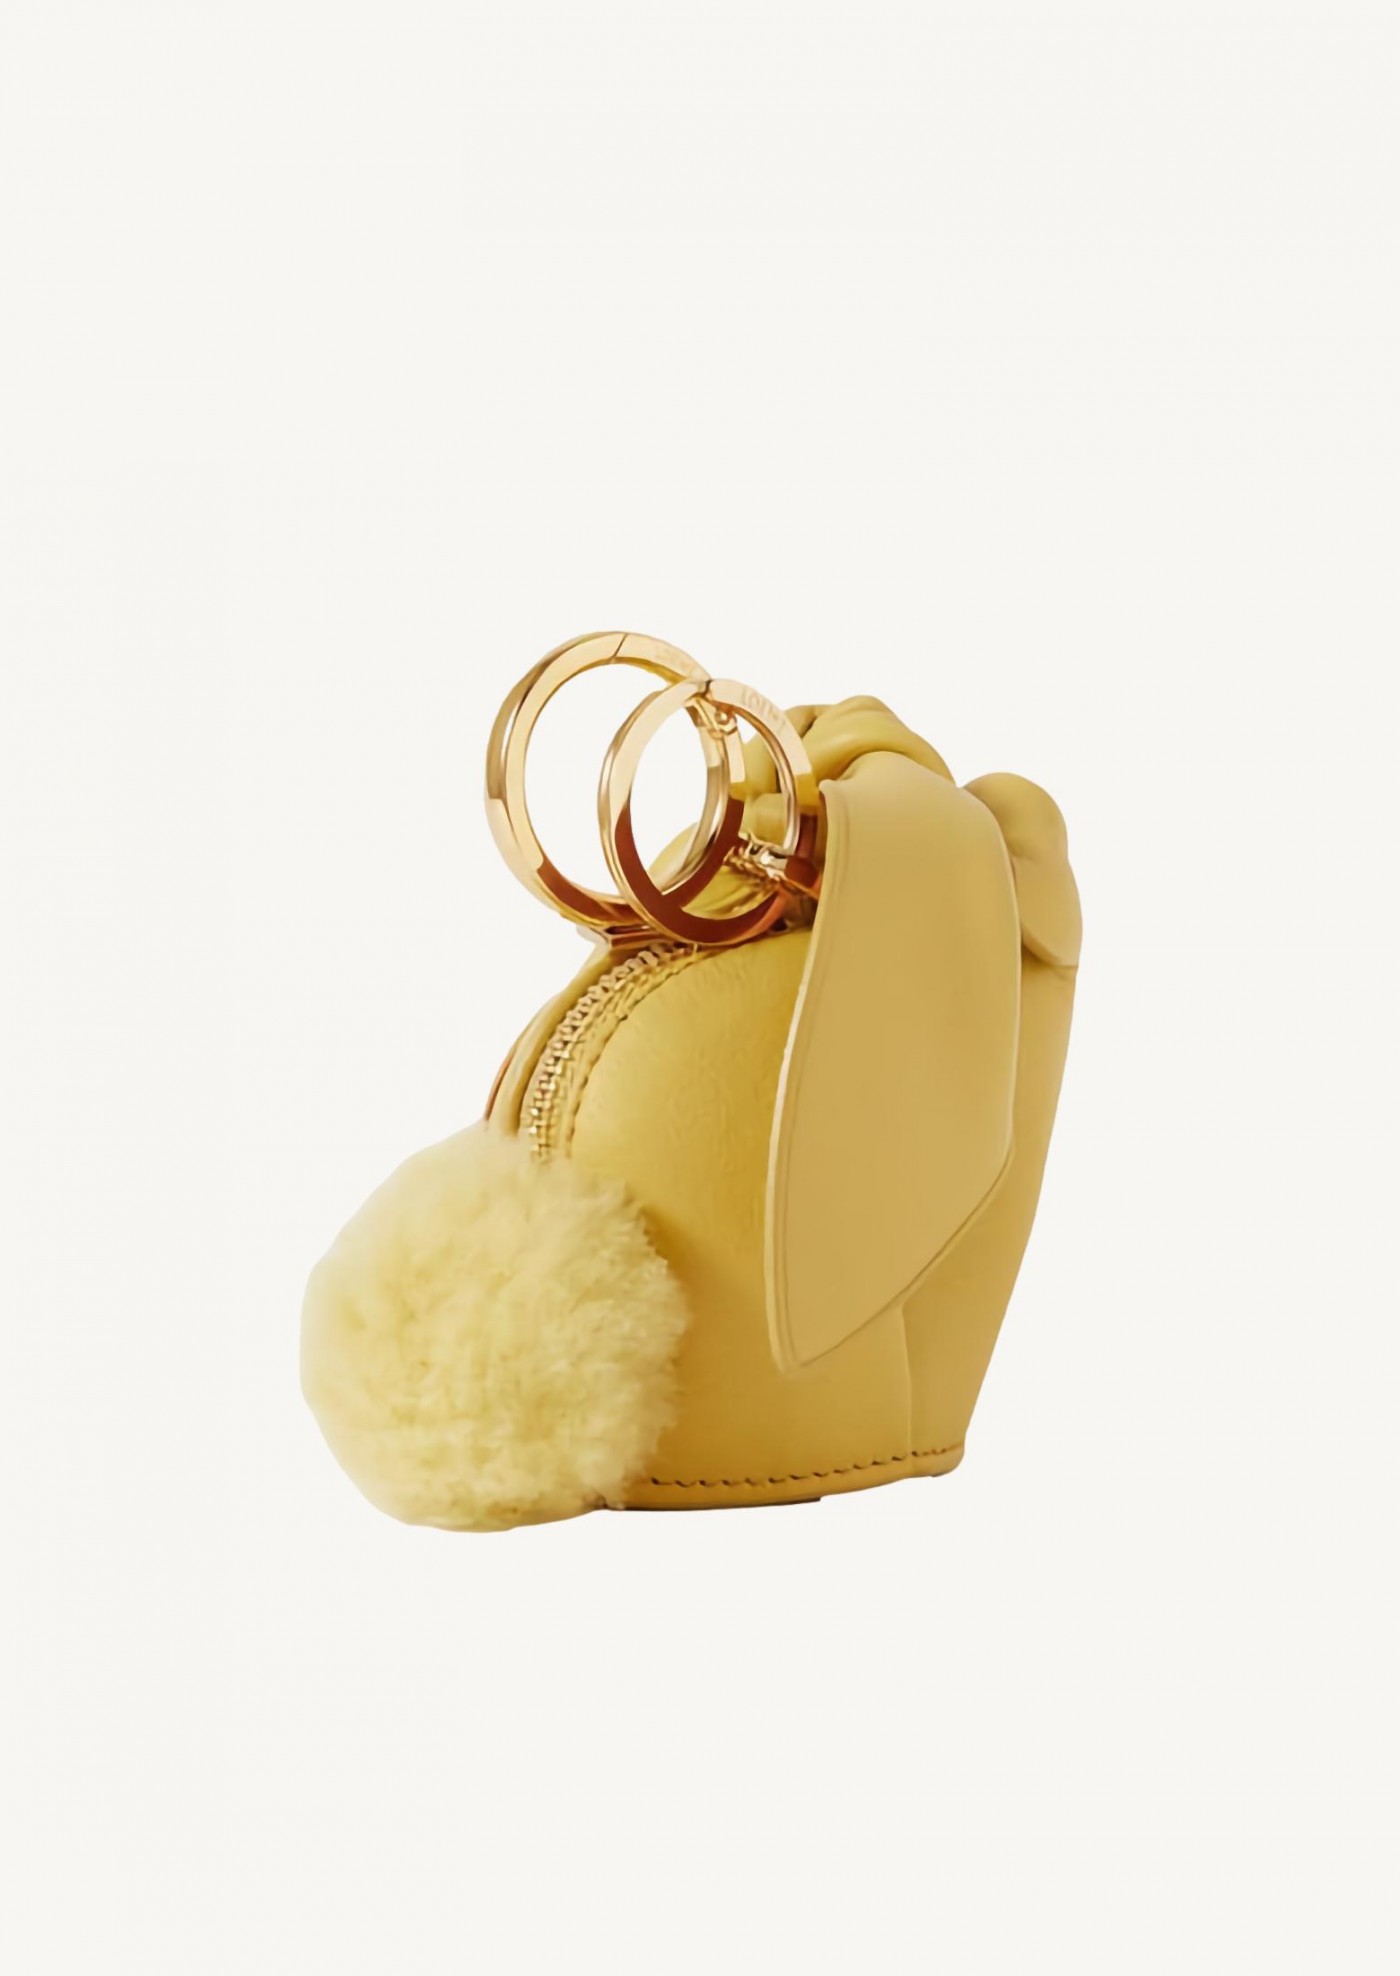 Porte-clés Bunny jaune